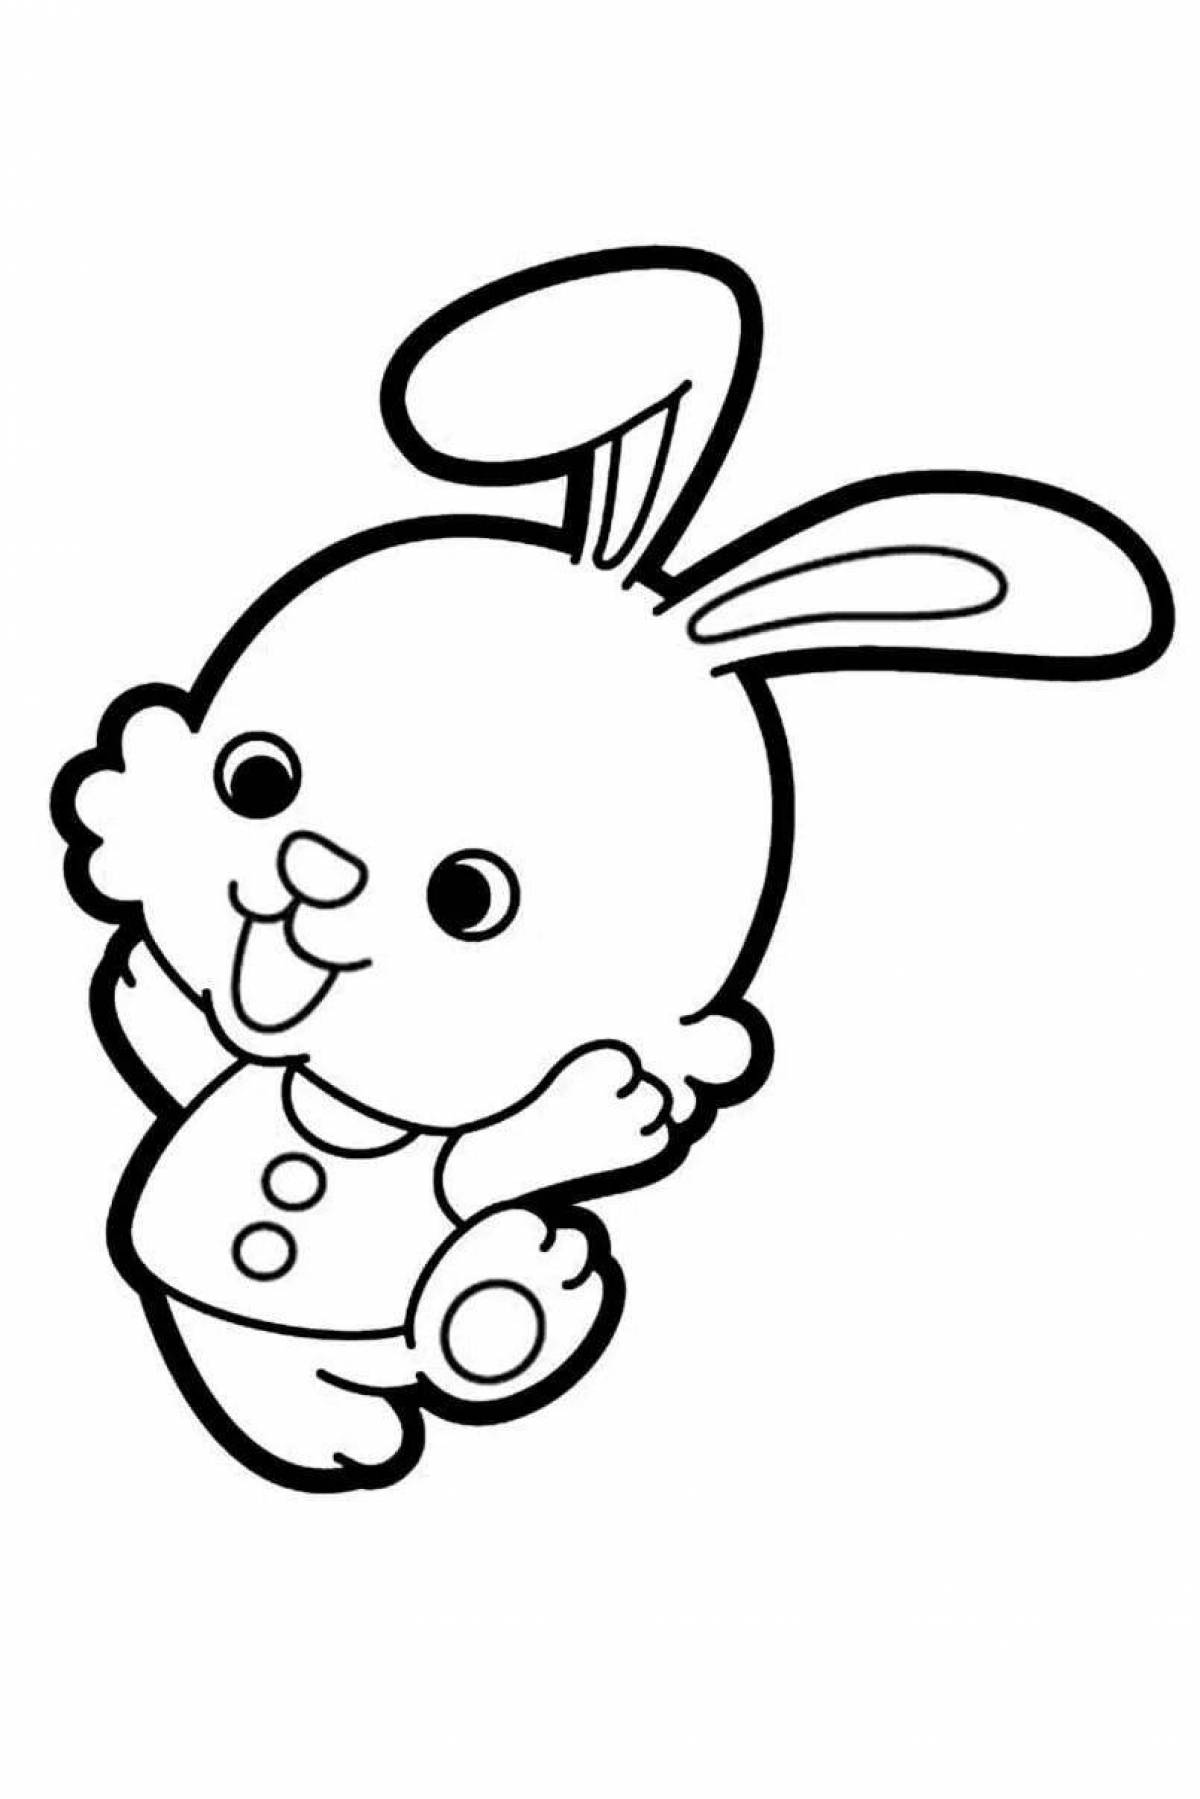 Baby bunny #2